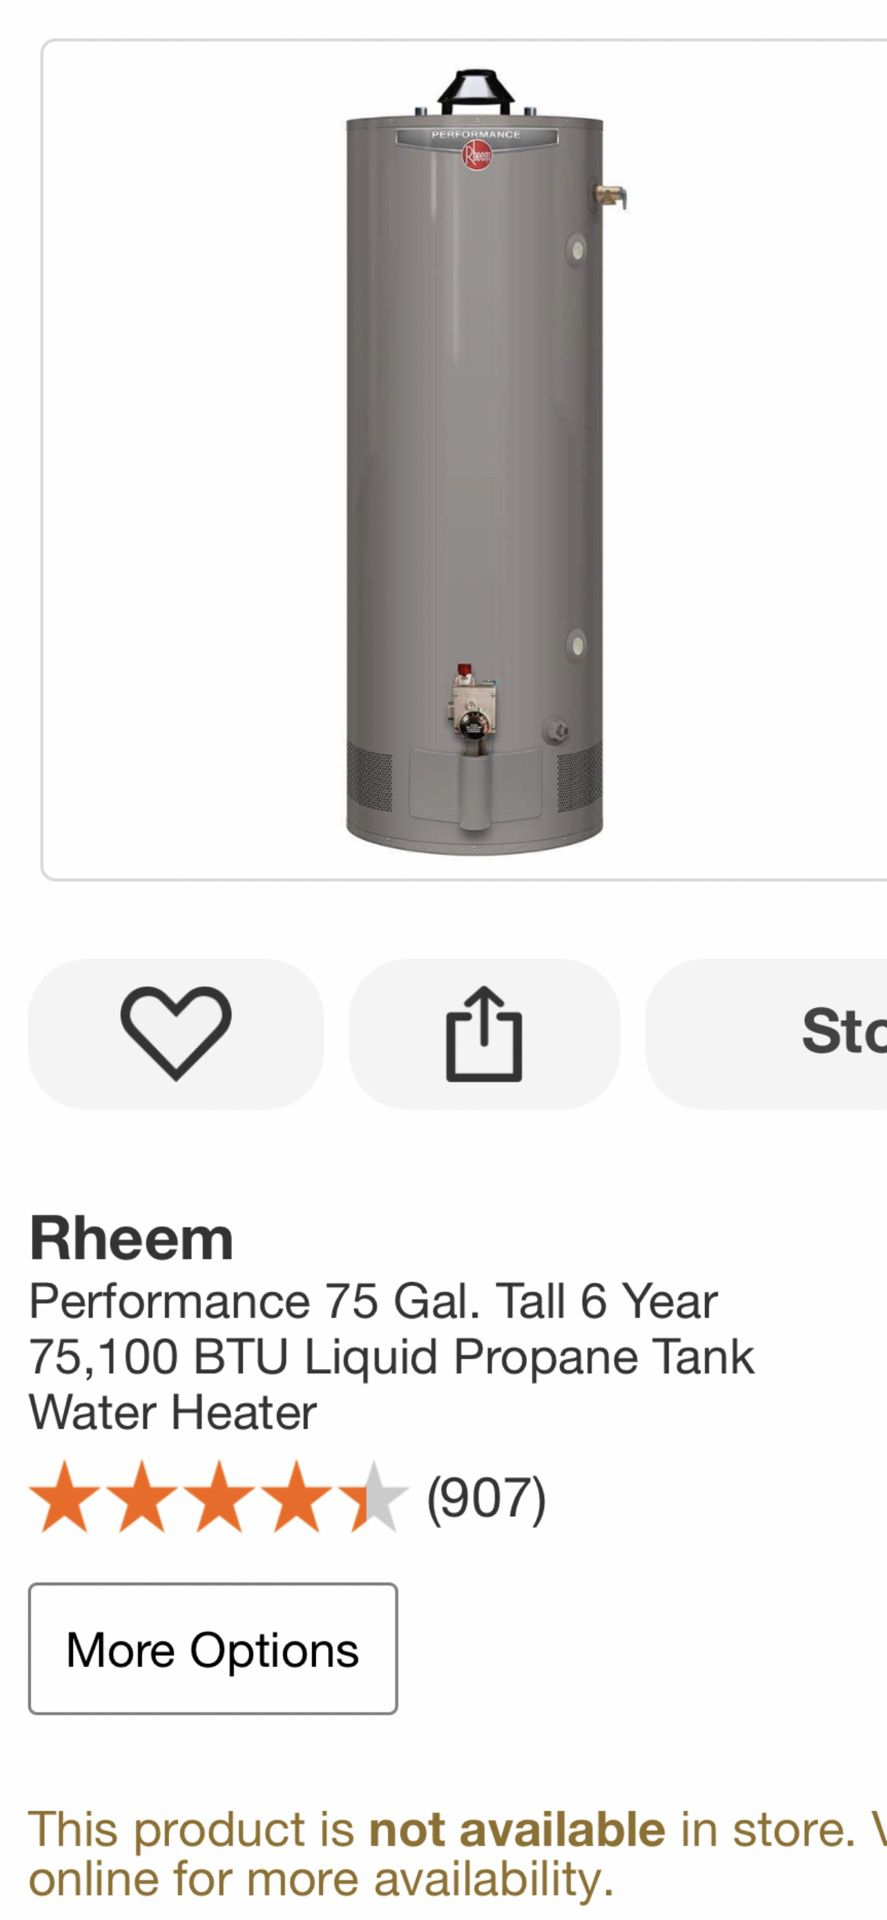 Rheem Performance 75 Gal. Tall 6 Year 75,100 BTU Liquid Propane Tank Water Heater (907)